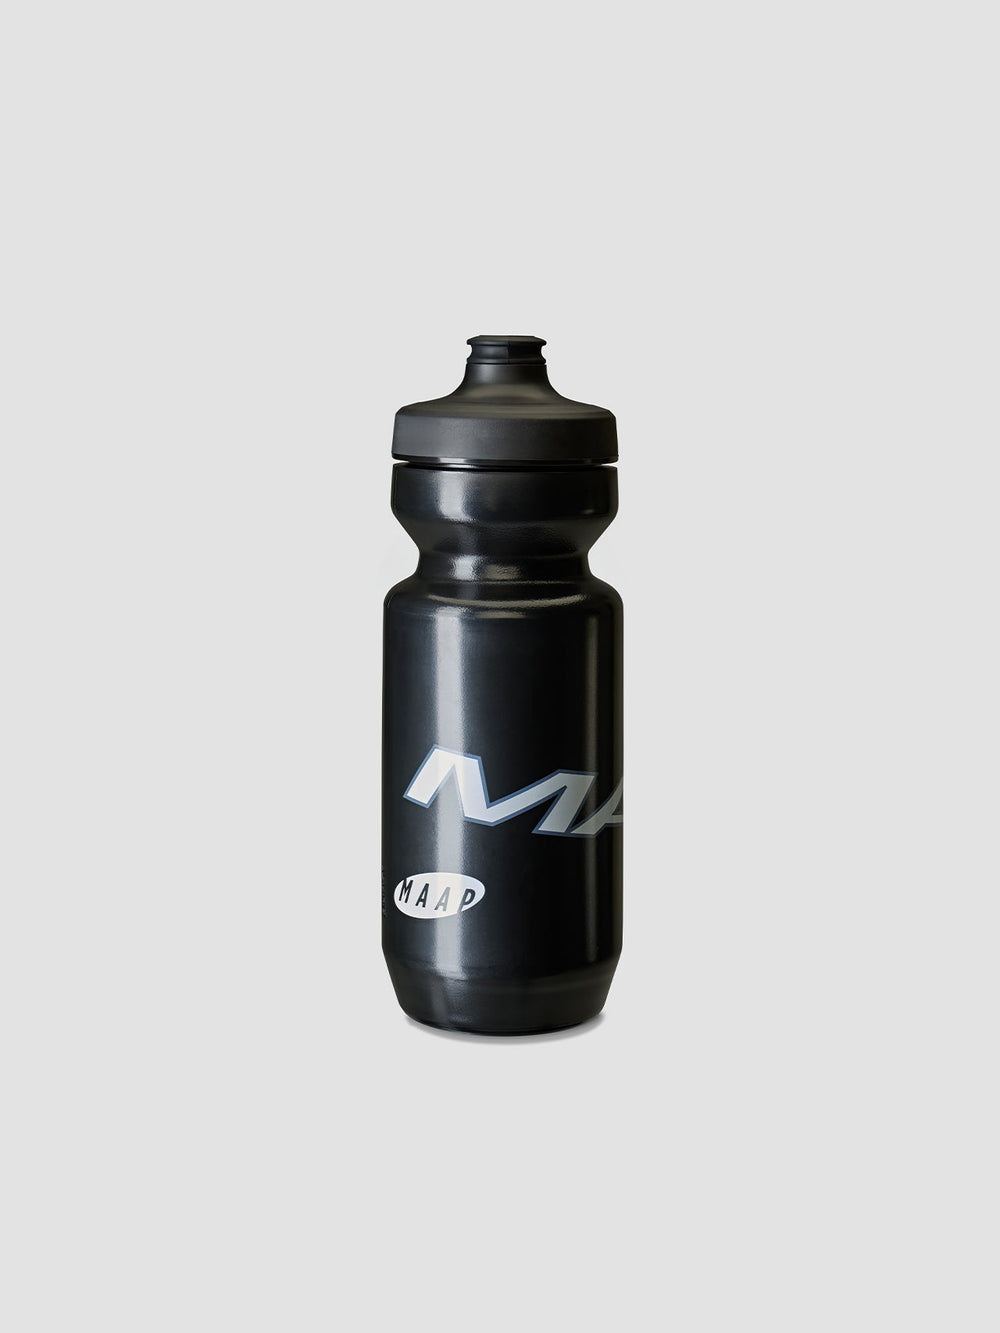 Product Image for League Bottle